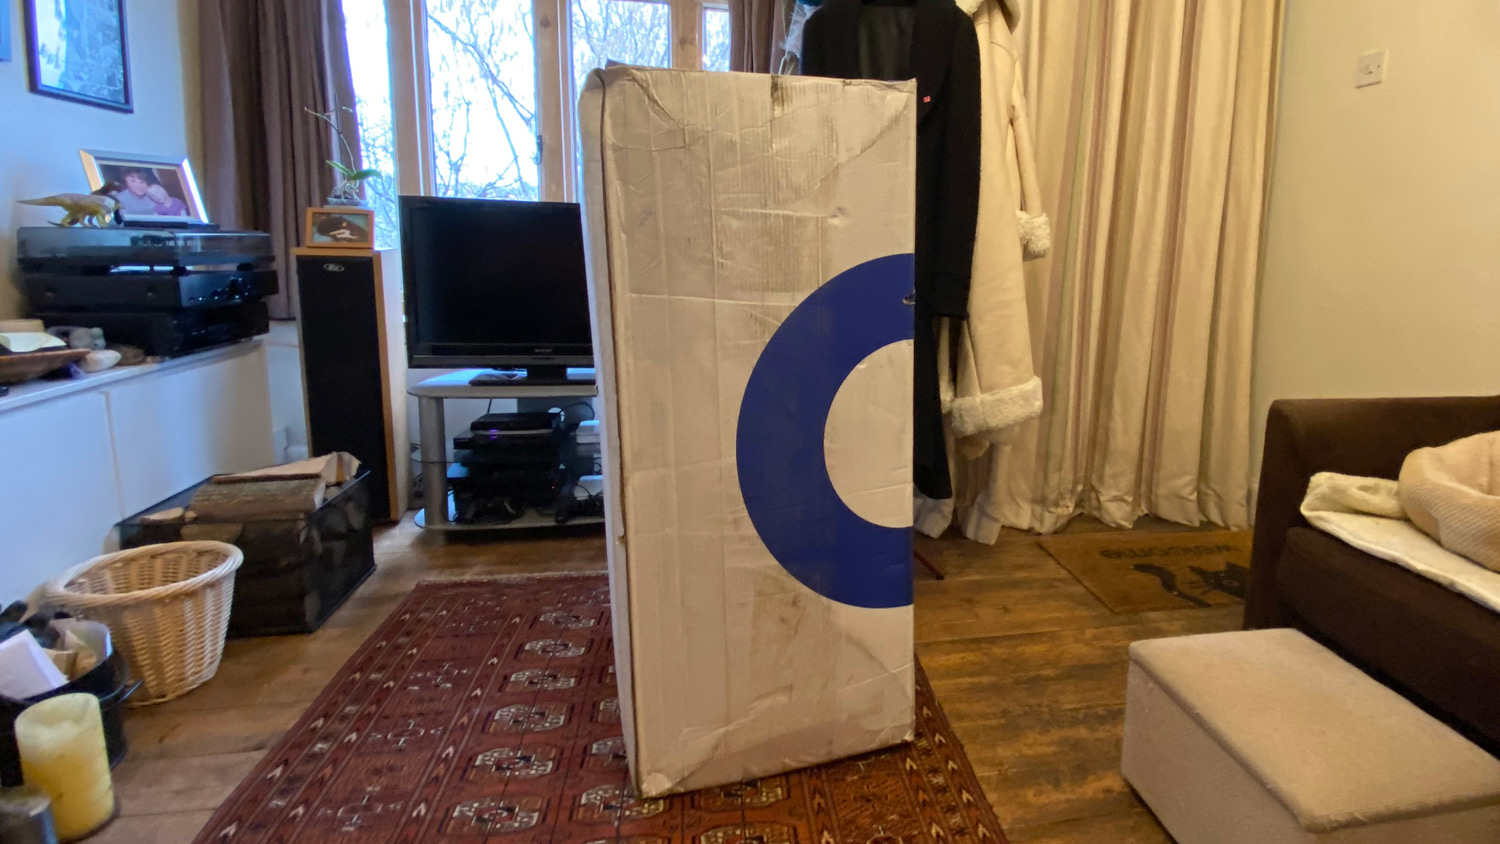 The Amerisleep AS3 Hybrid mattress in its box, in a living room